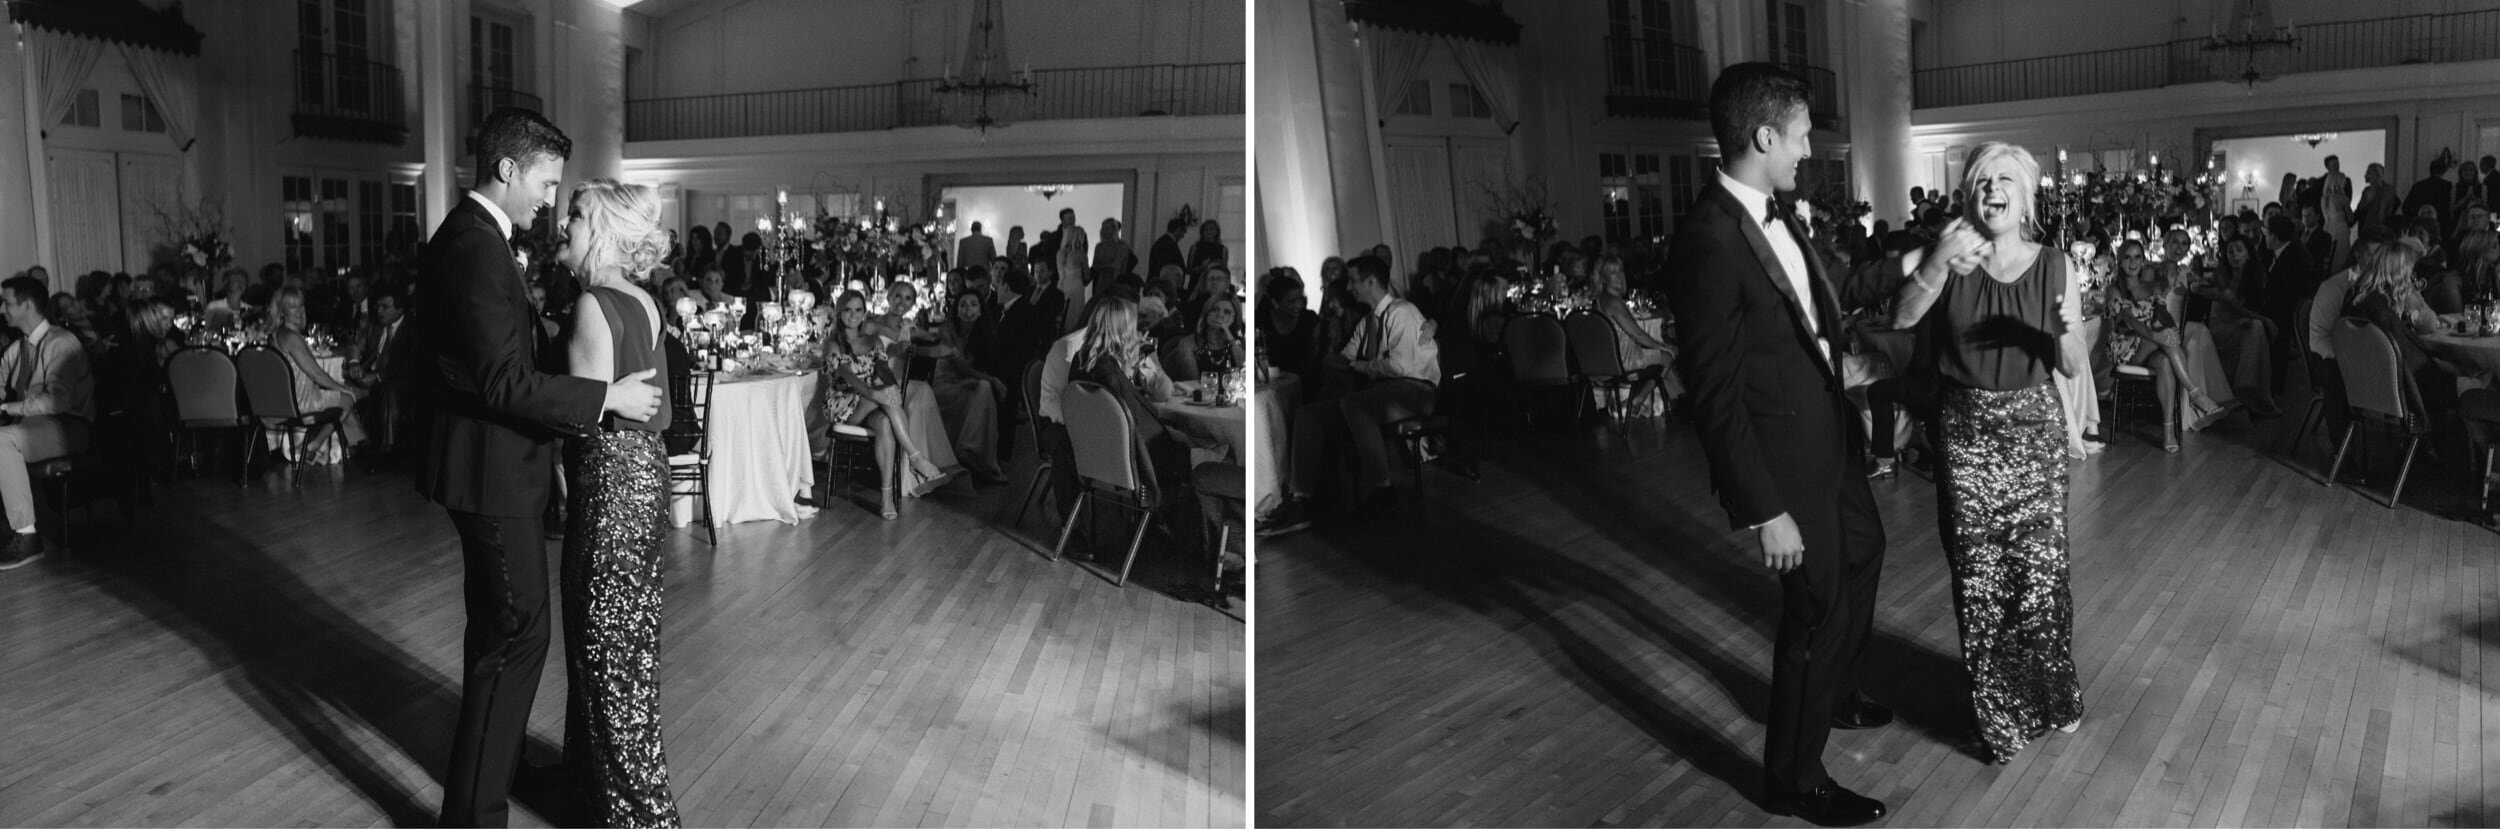 70-Lafayette-club-minnesota-wedding-reception-photography.jpg